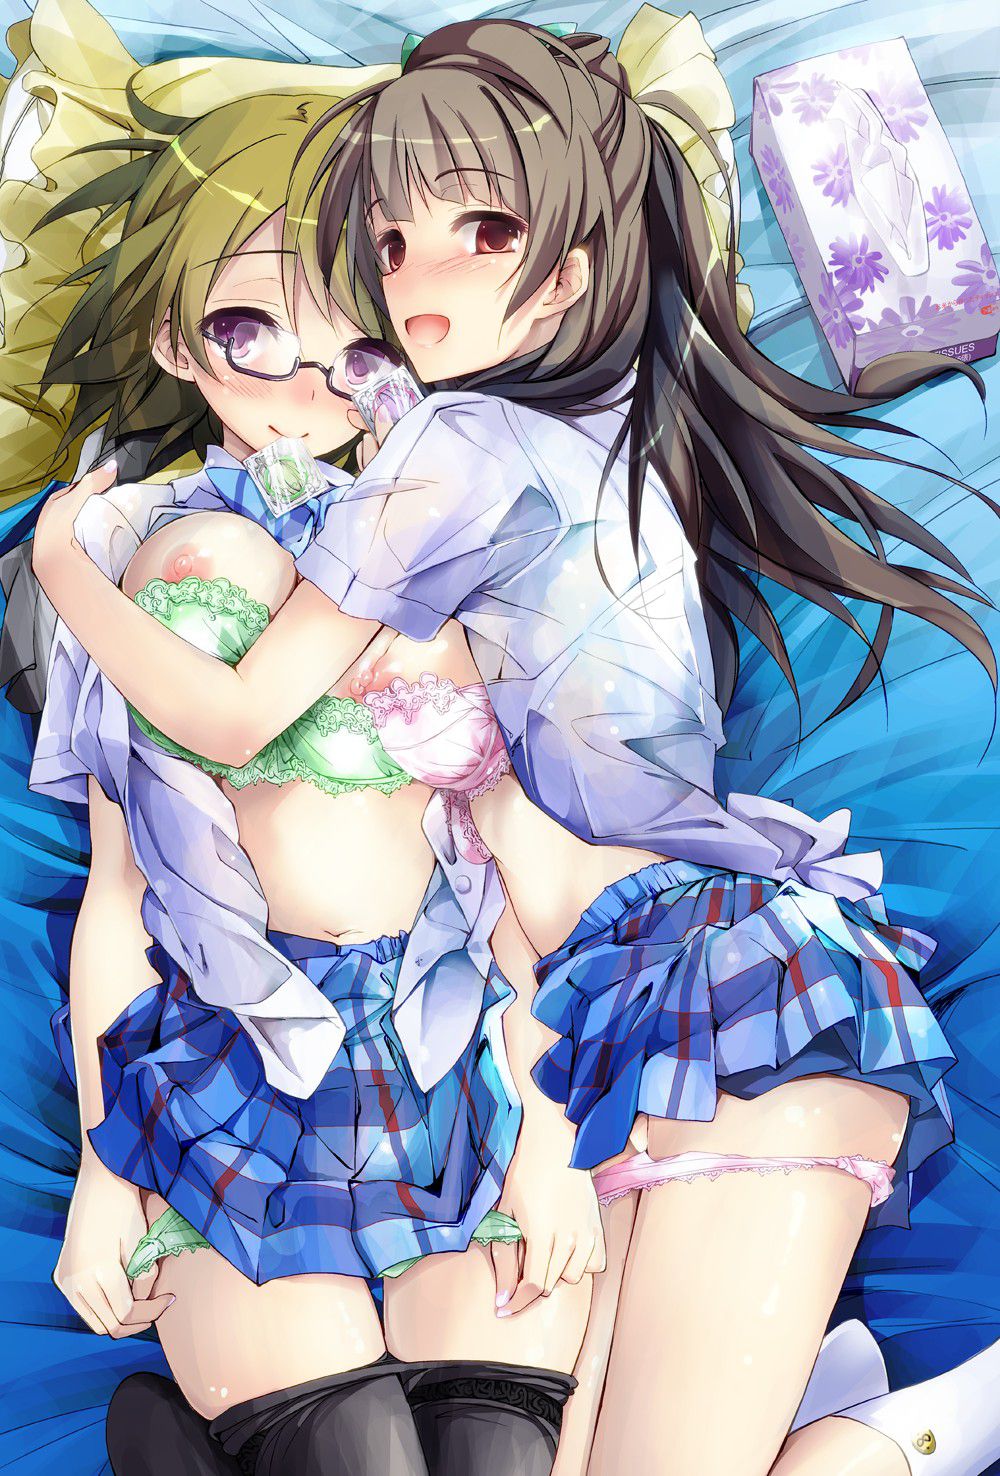 [Second anime ERO image: condom image 6 19